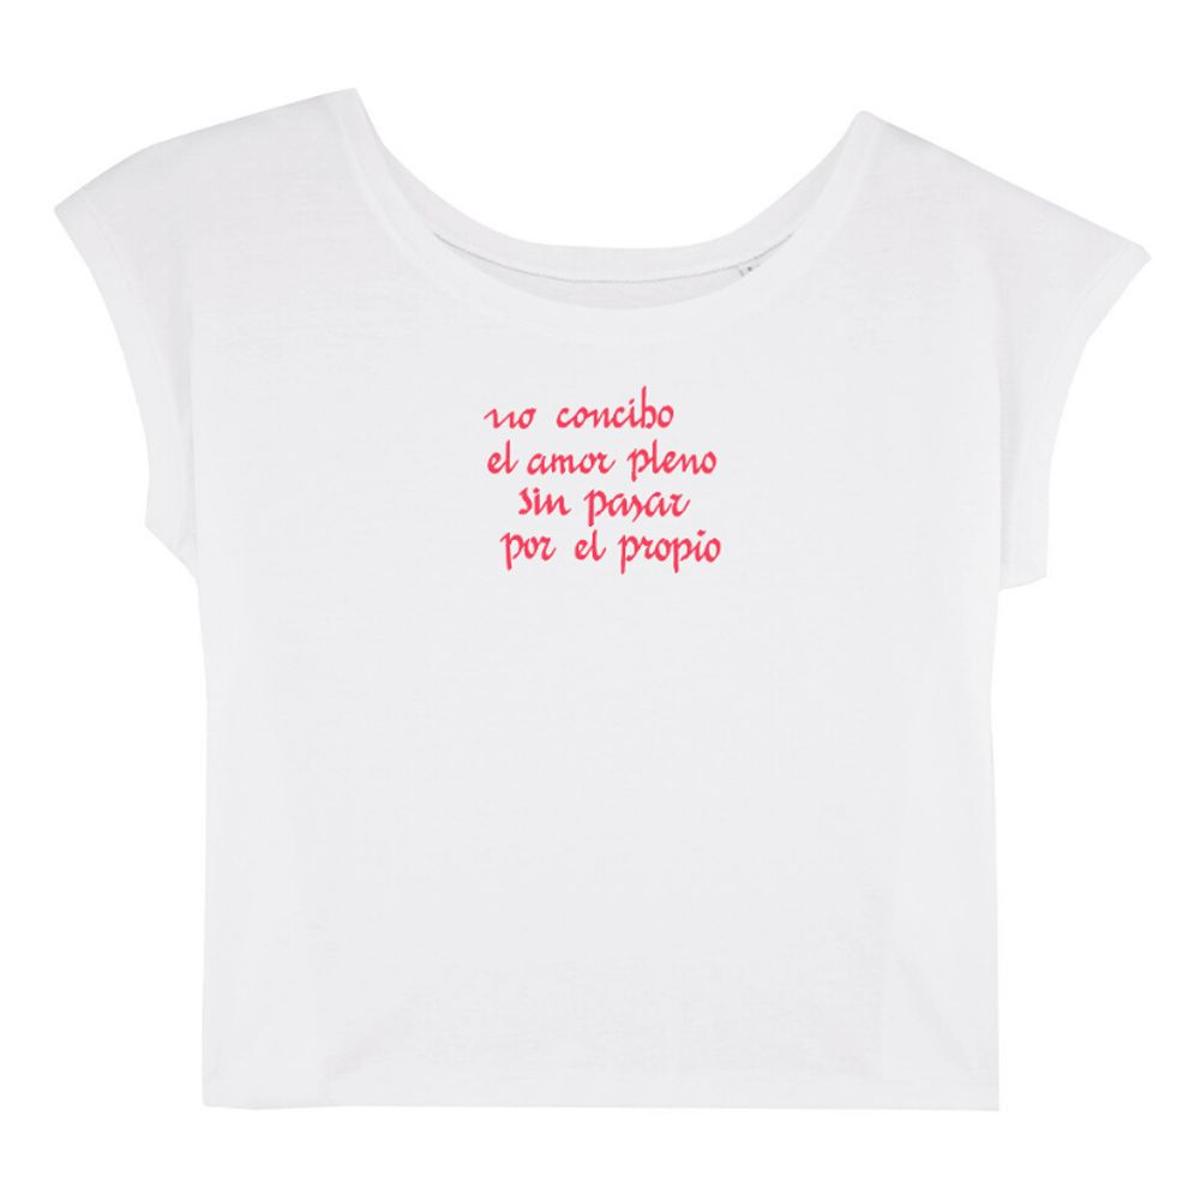 Camiseta con mensaje feminista de Uttopy. (Precio: 33,95 euros)